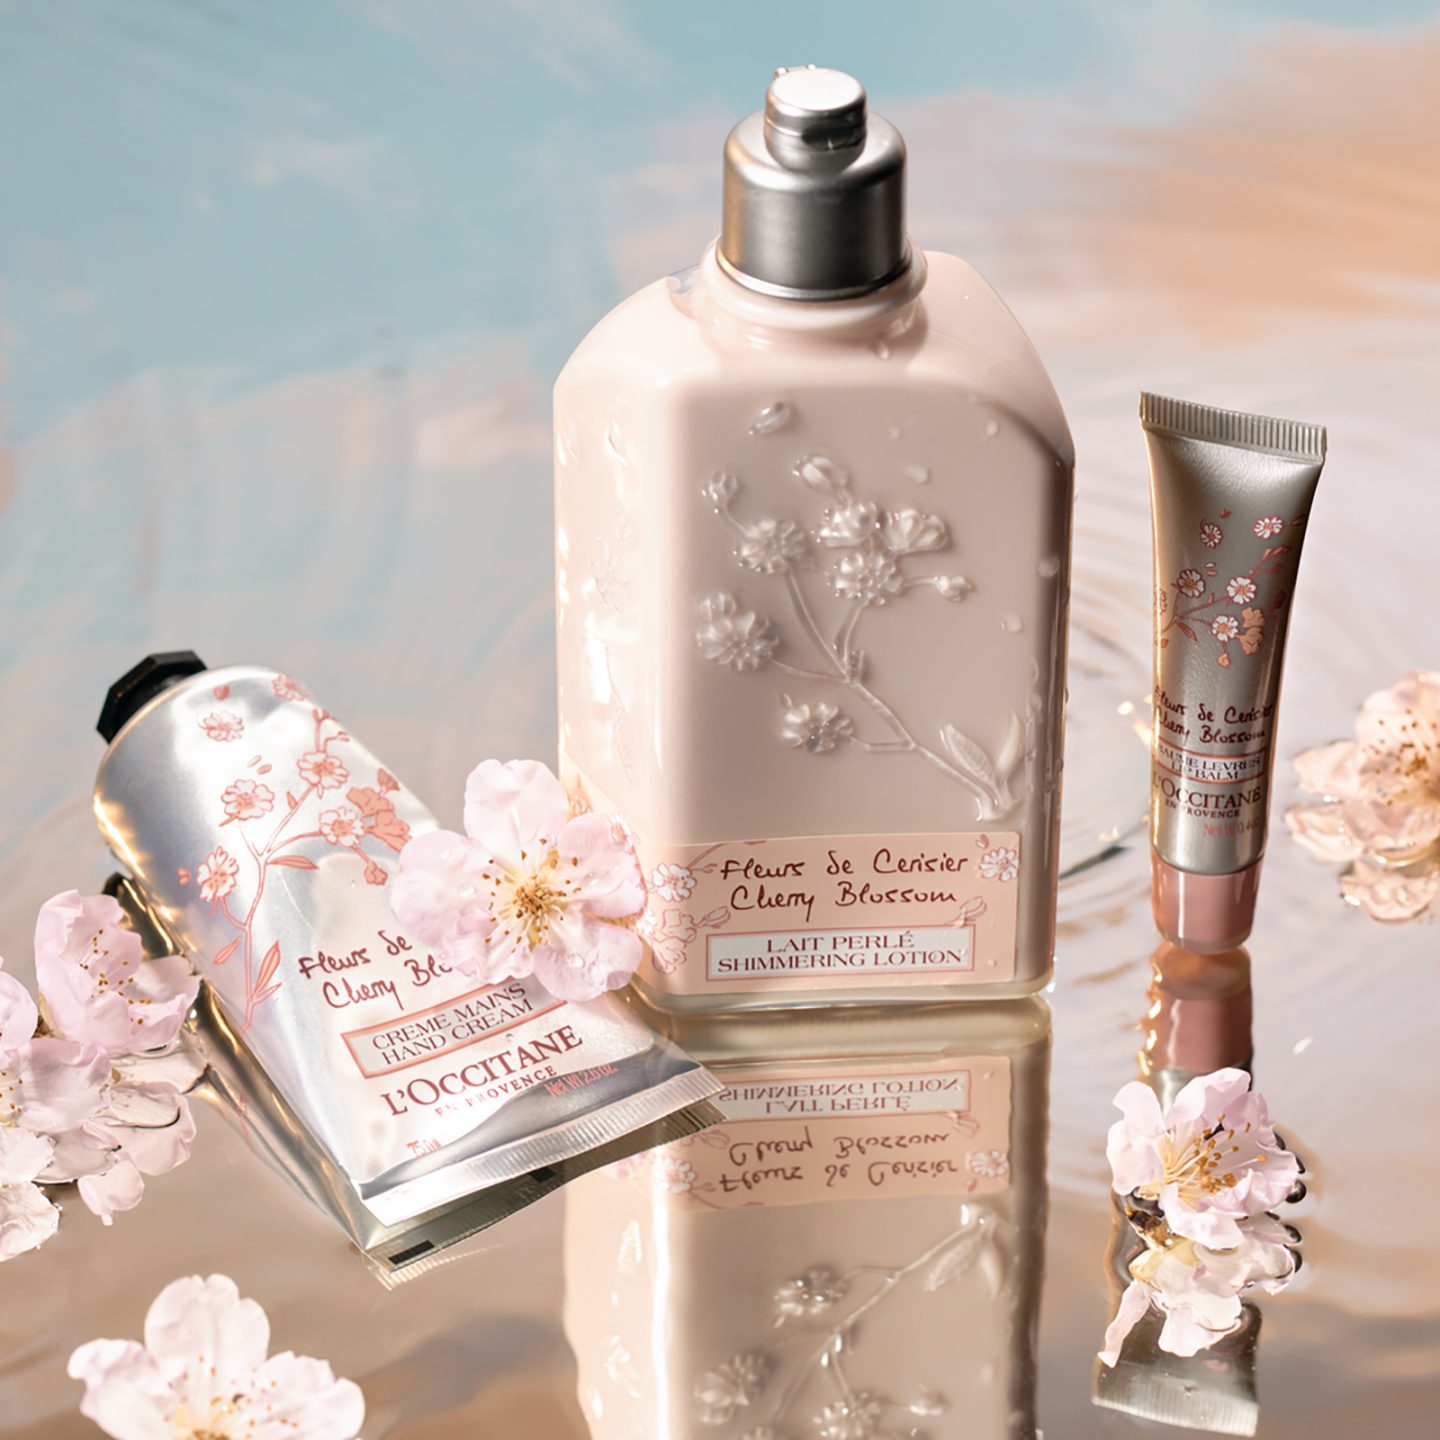 L'occitane Cherry Blossom Body Products